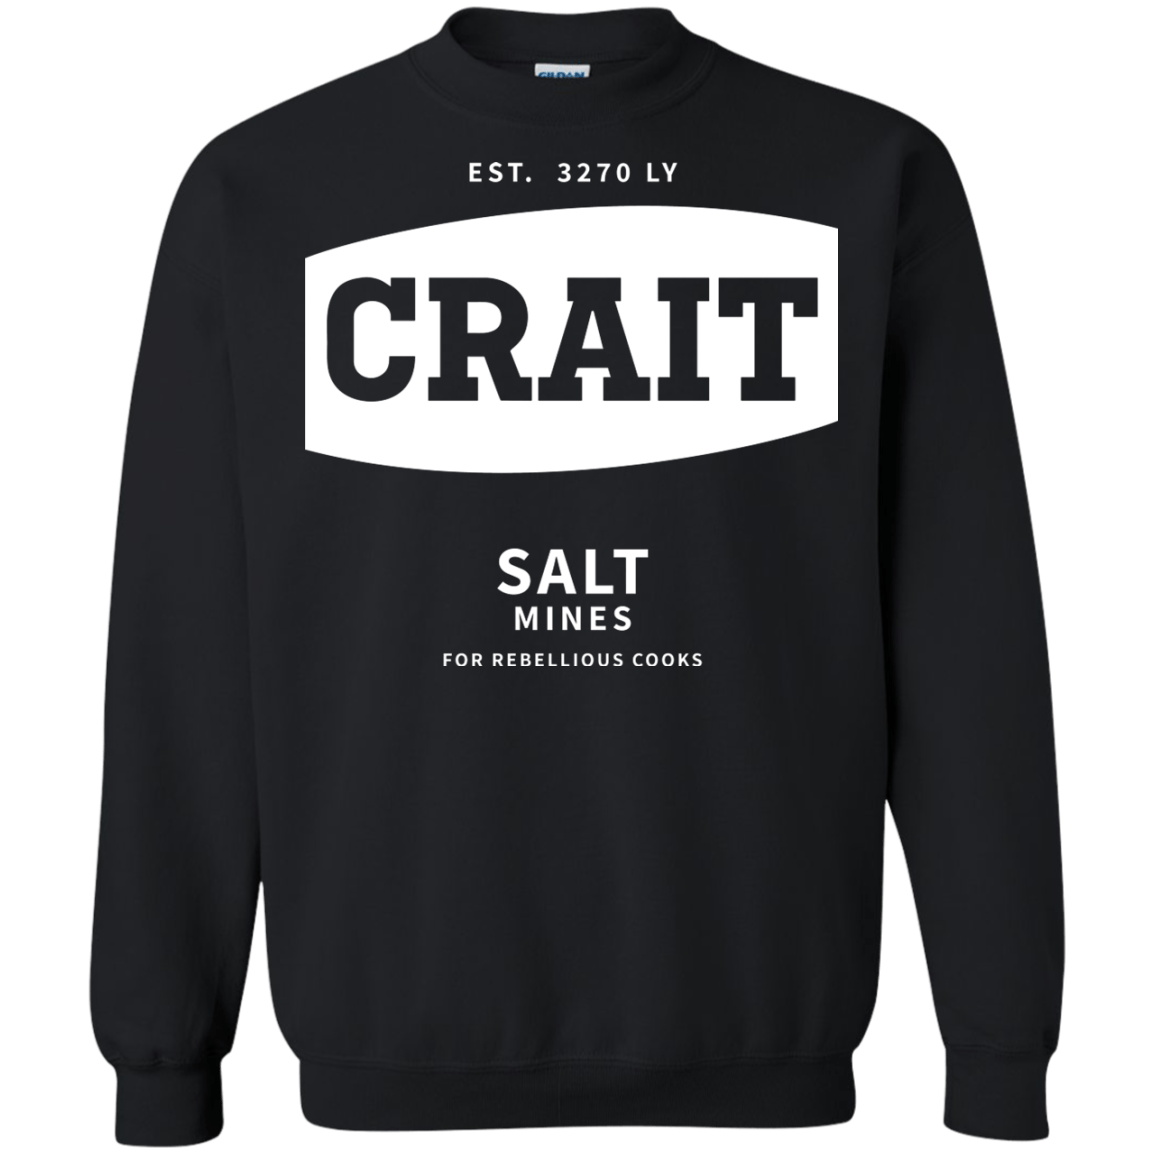 Sweatshirts Black / S Crait Saxa Salt Crewneck Sweatshirt